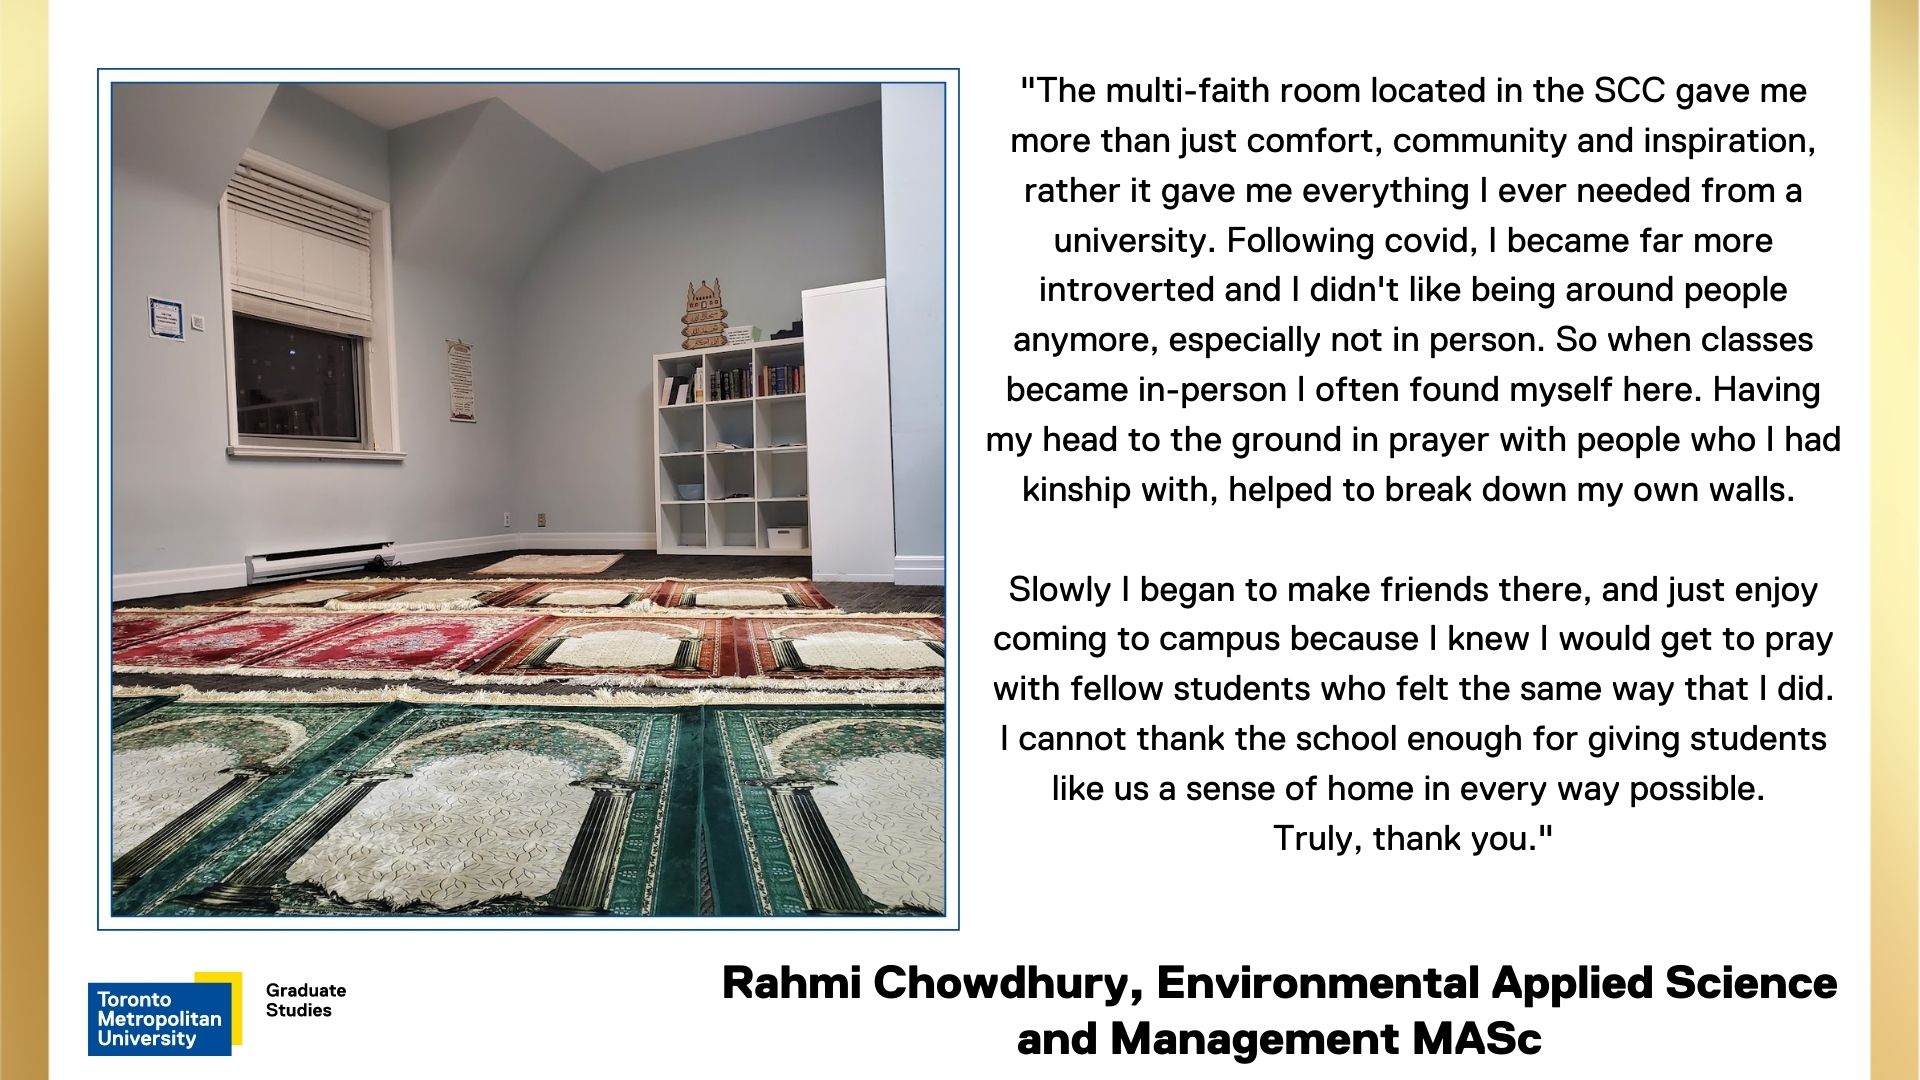 Rahmi-Chowdhury. Low angle shot of multi-faith room inside SCC building.